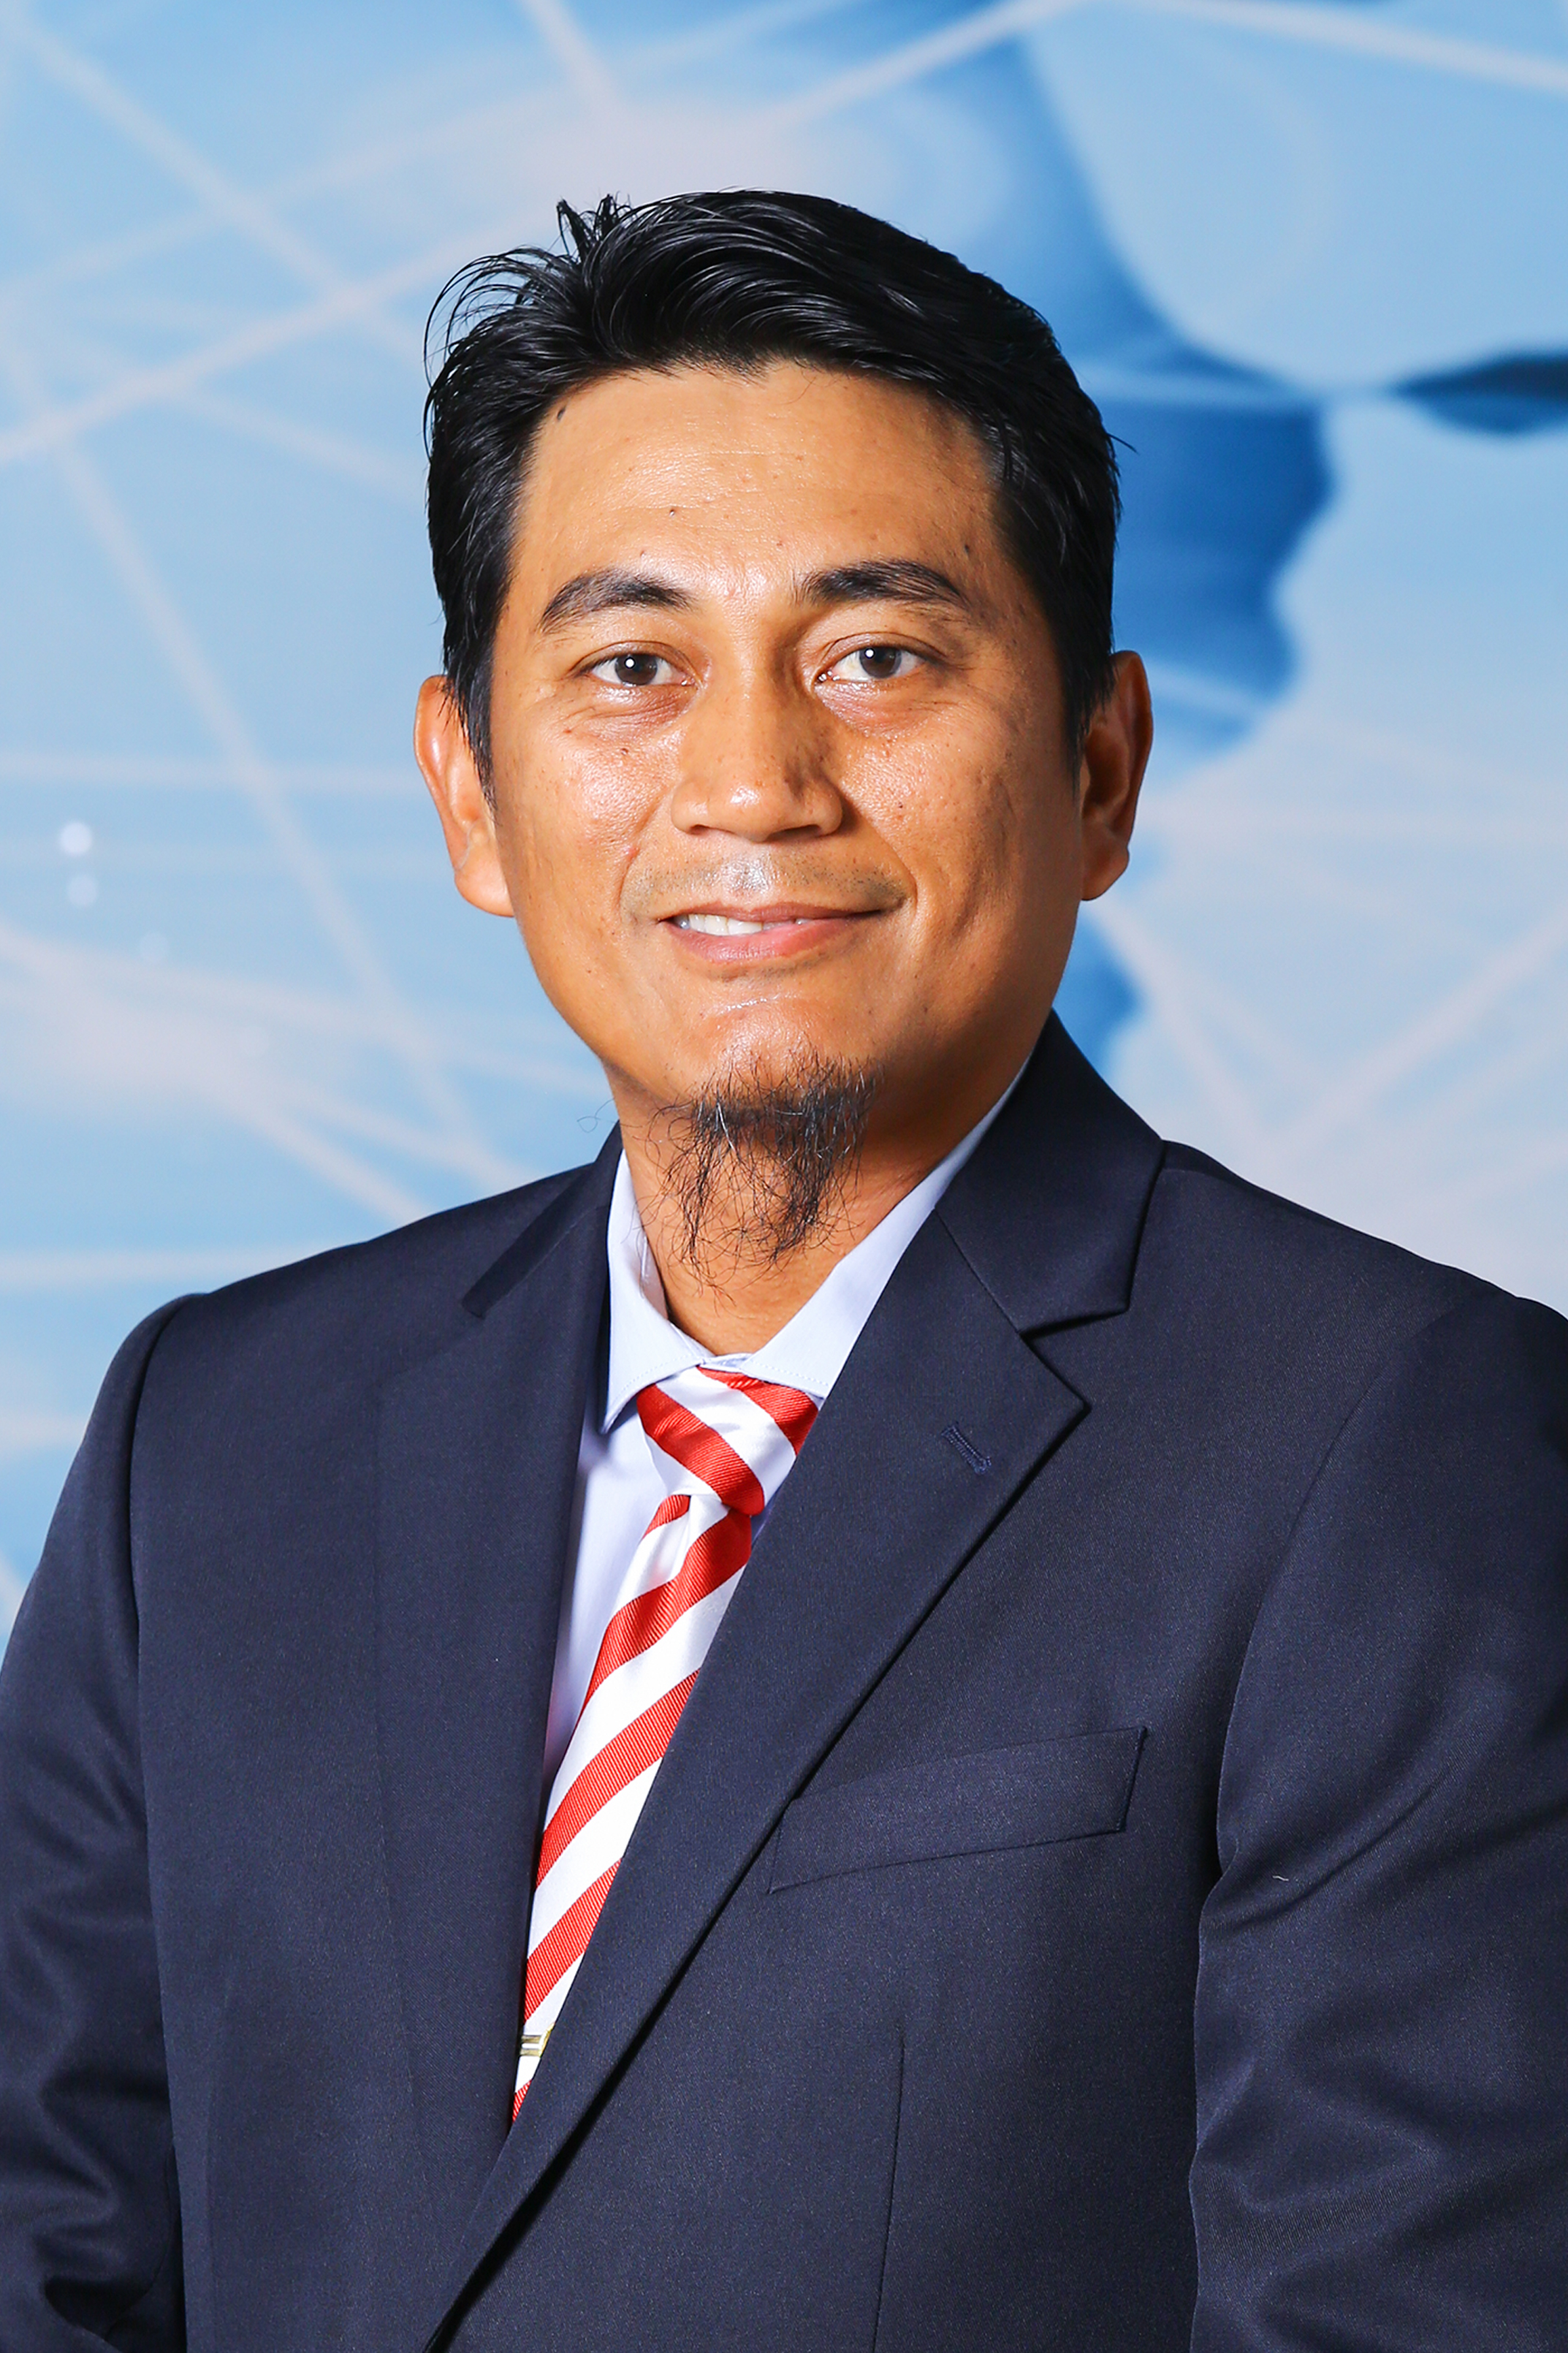 Assoc. Prof. Dr. Muslimin Wallang